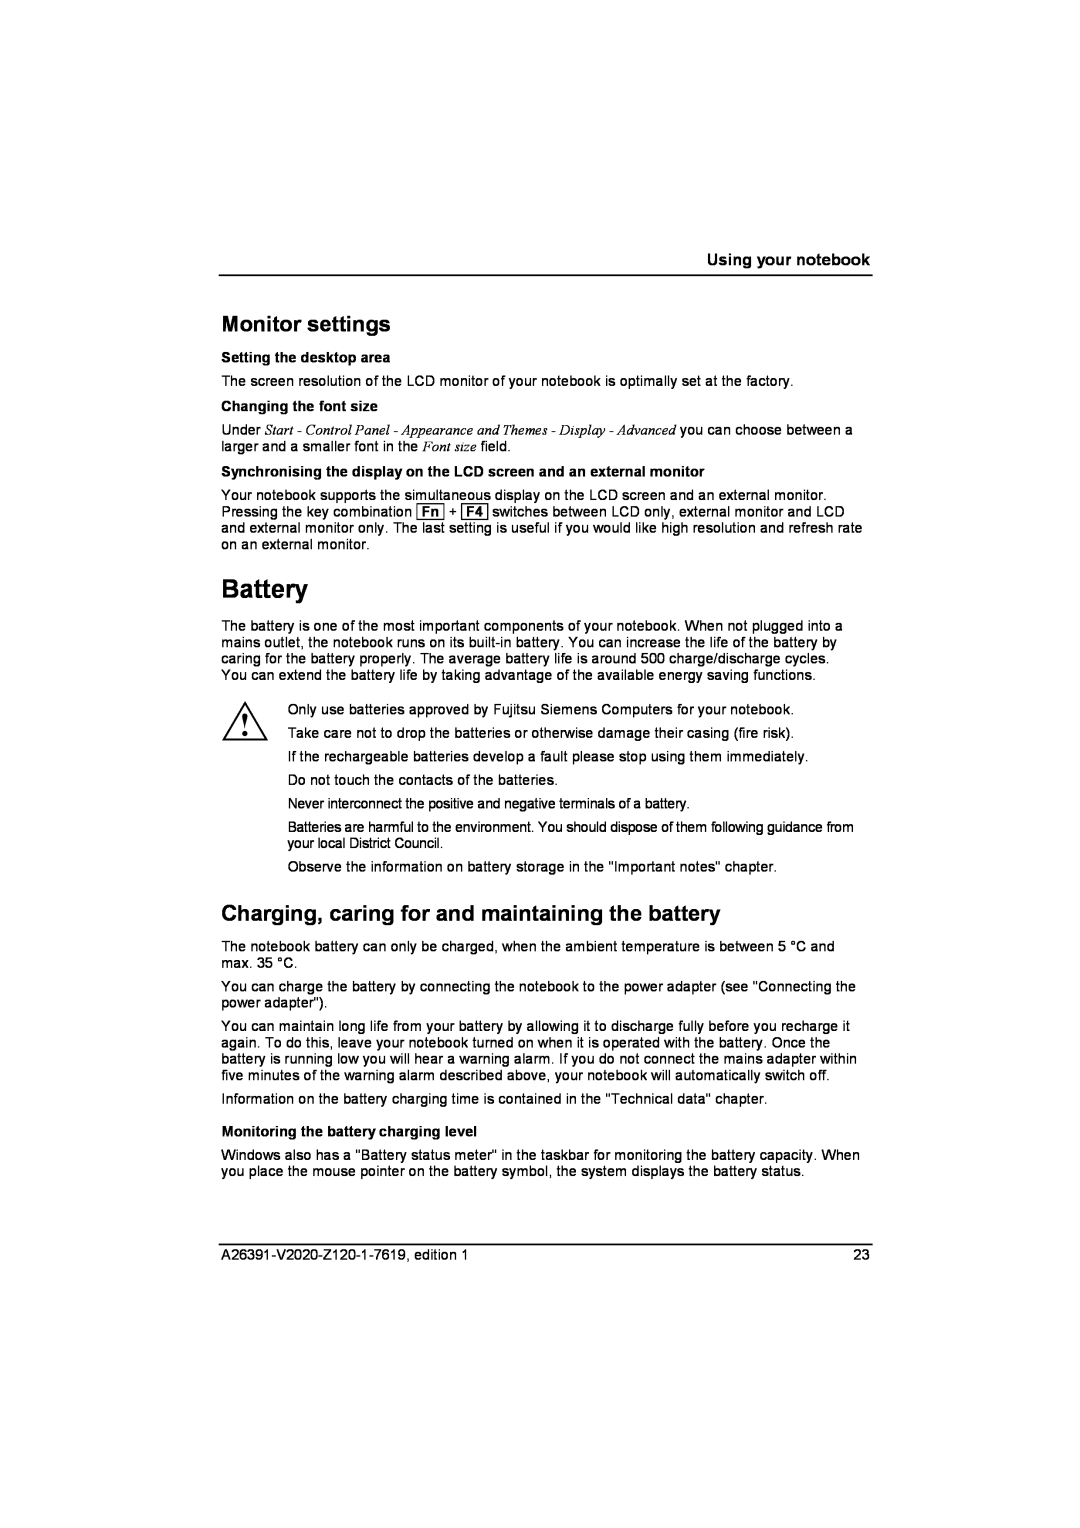 Fujitsu Siemens Computers V2020 manual Battery, Monitor settings, Charging, caring for and maintaining the battery 